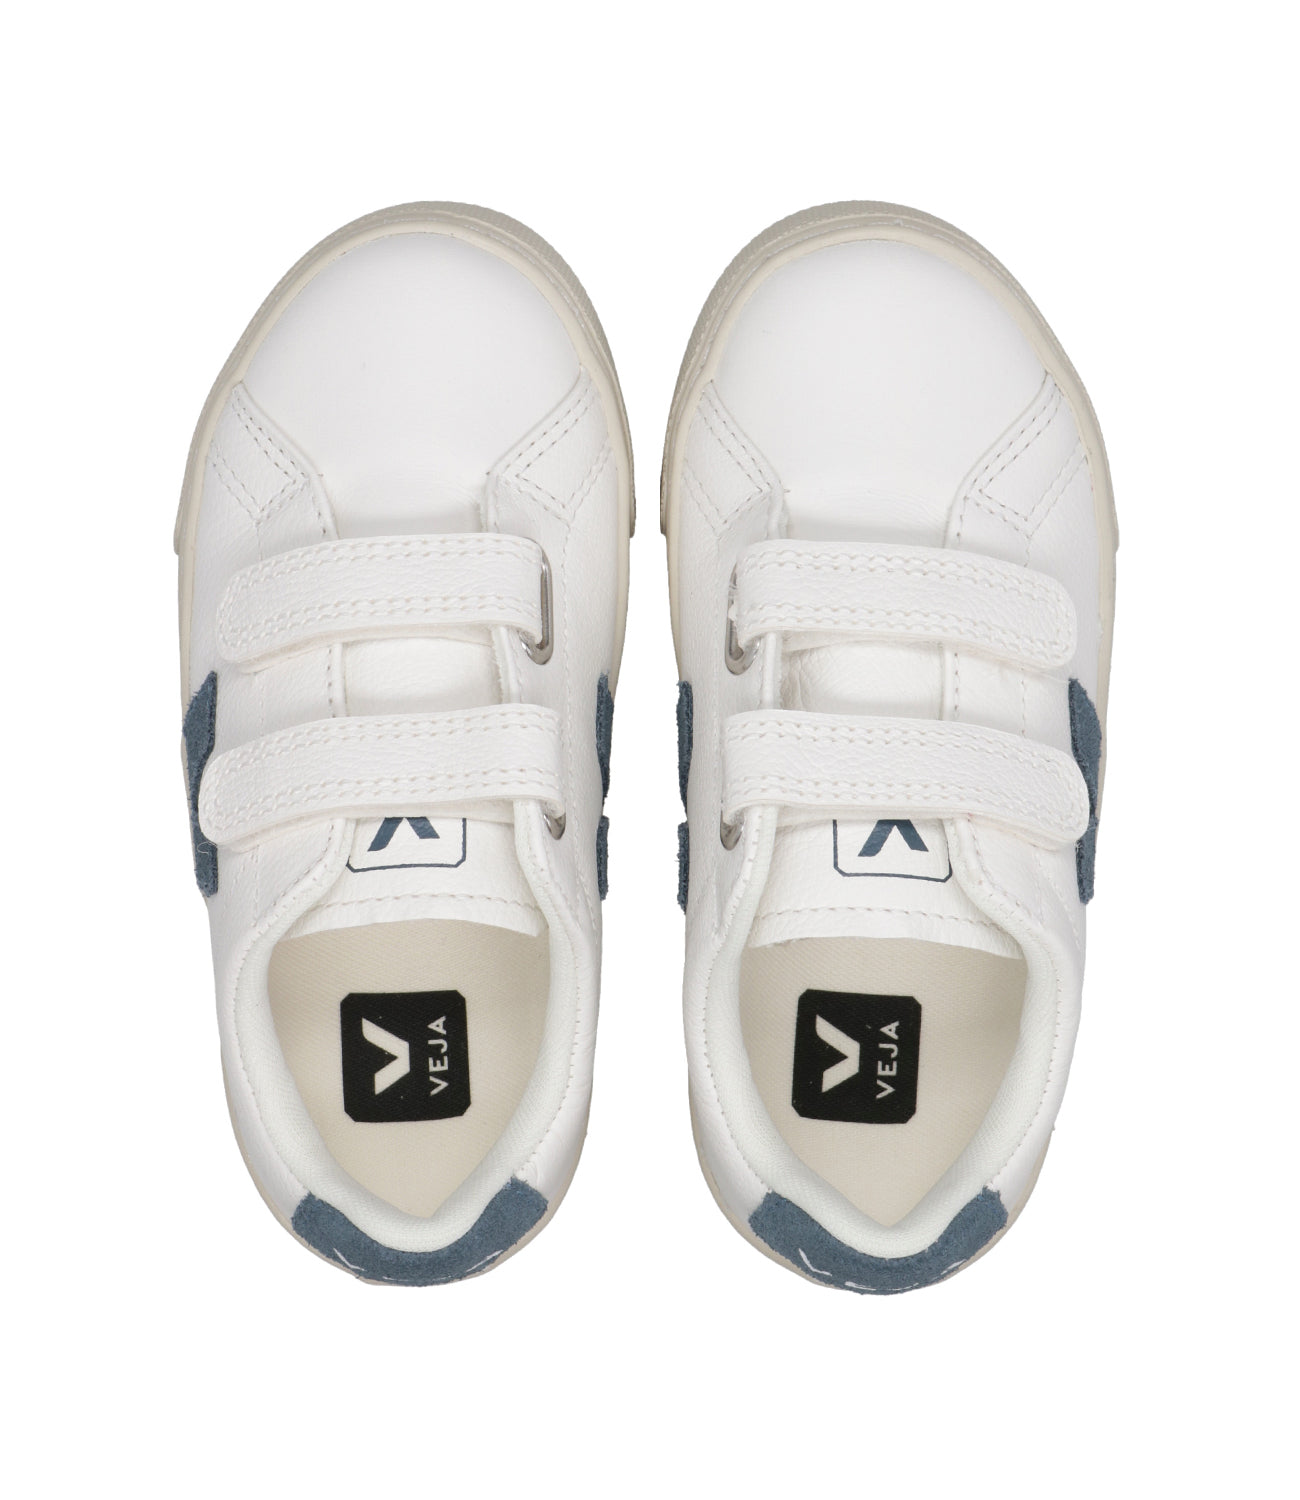 Veja Kids | Sneakers Small Esplar Bianco e Blu